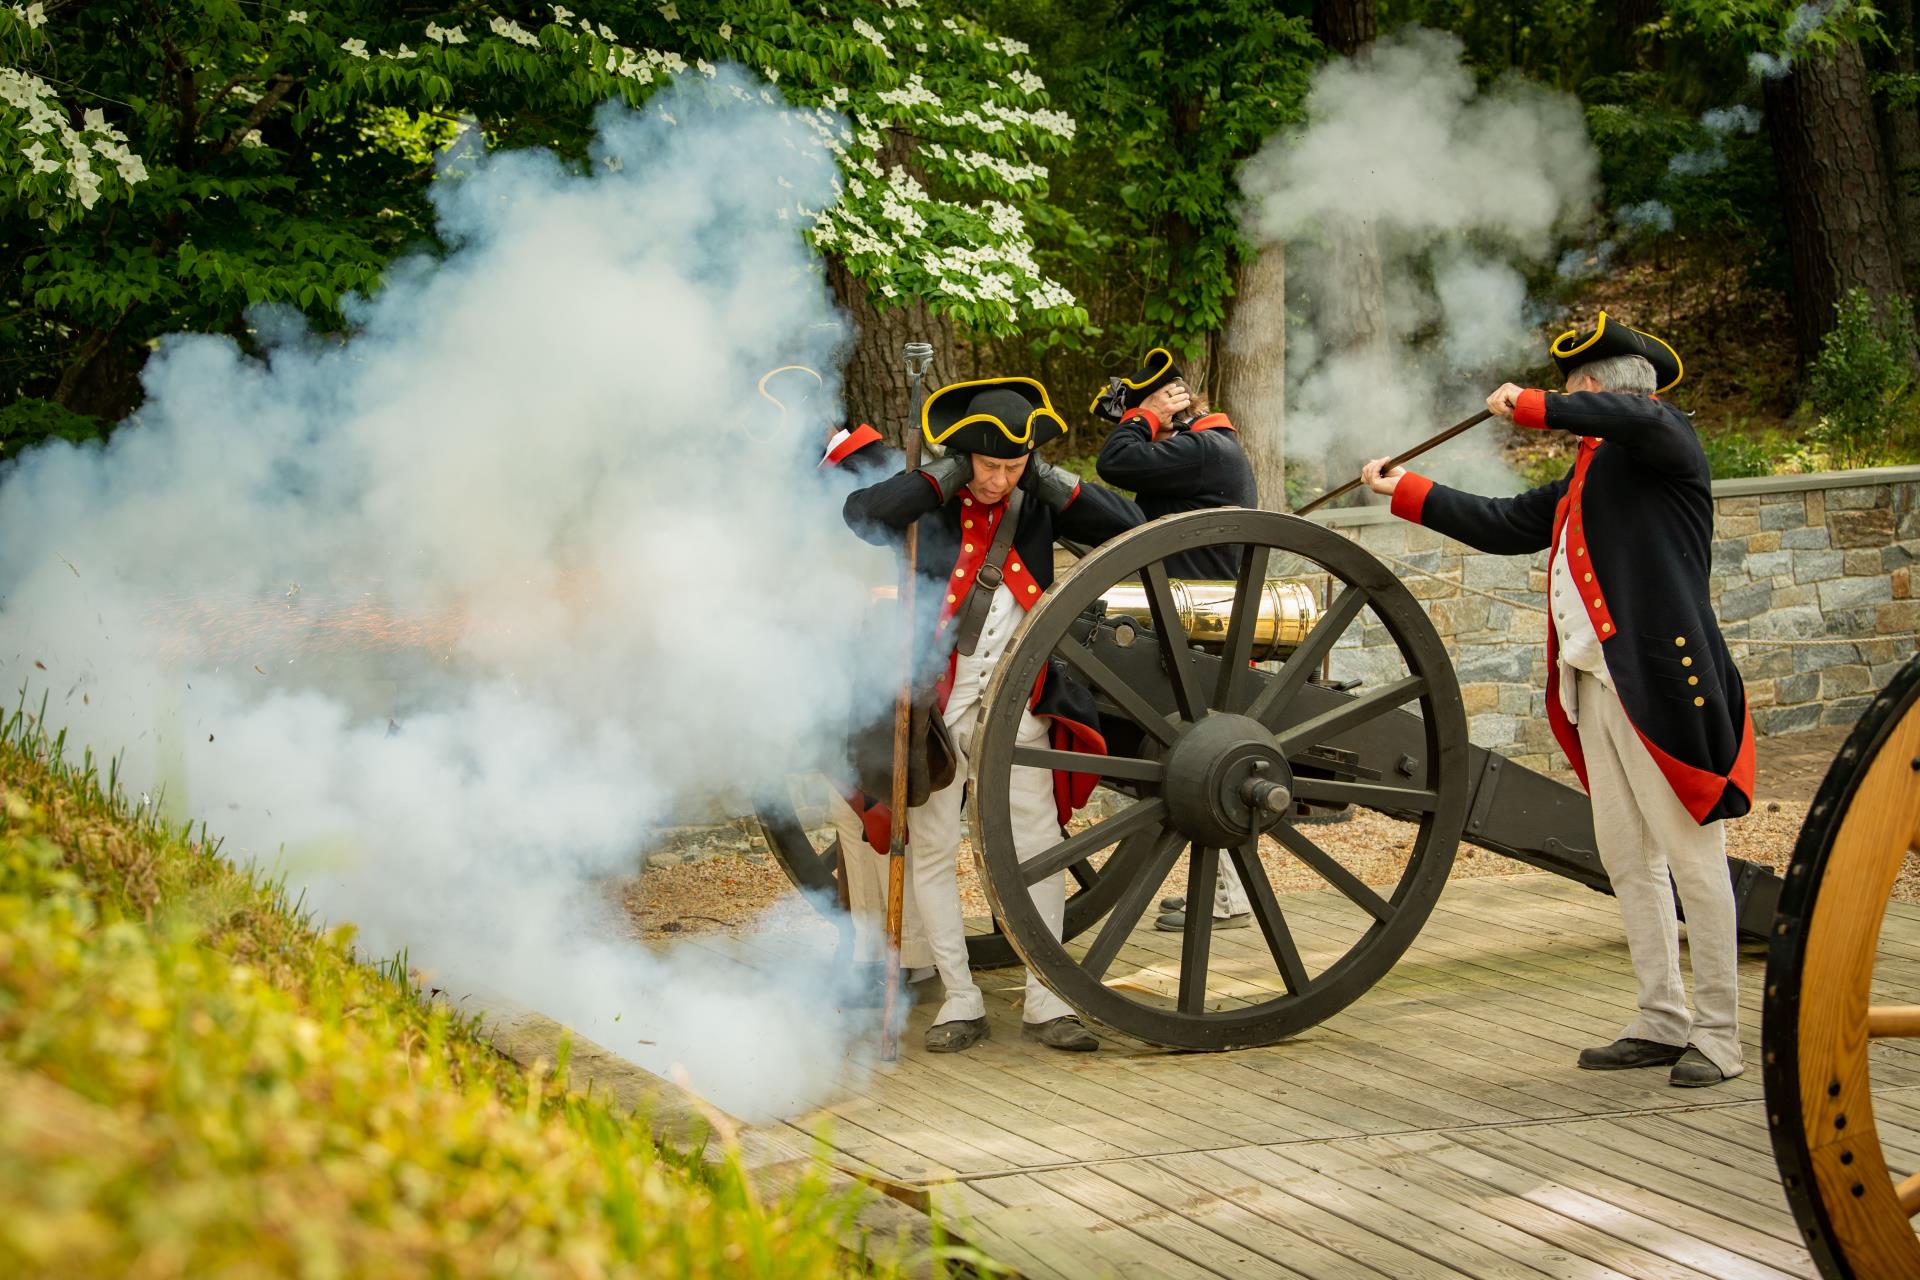 Continental army interpreters fire artillery